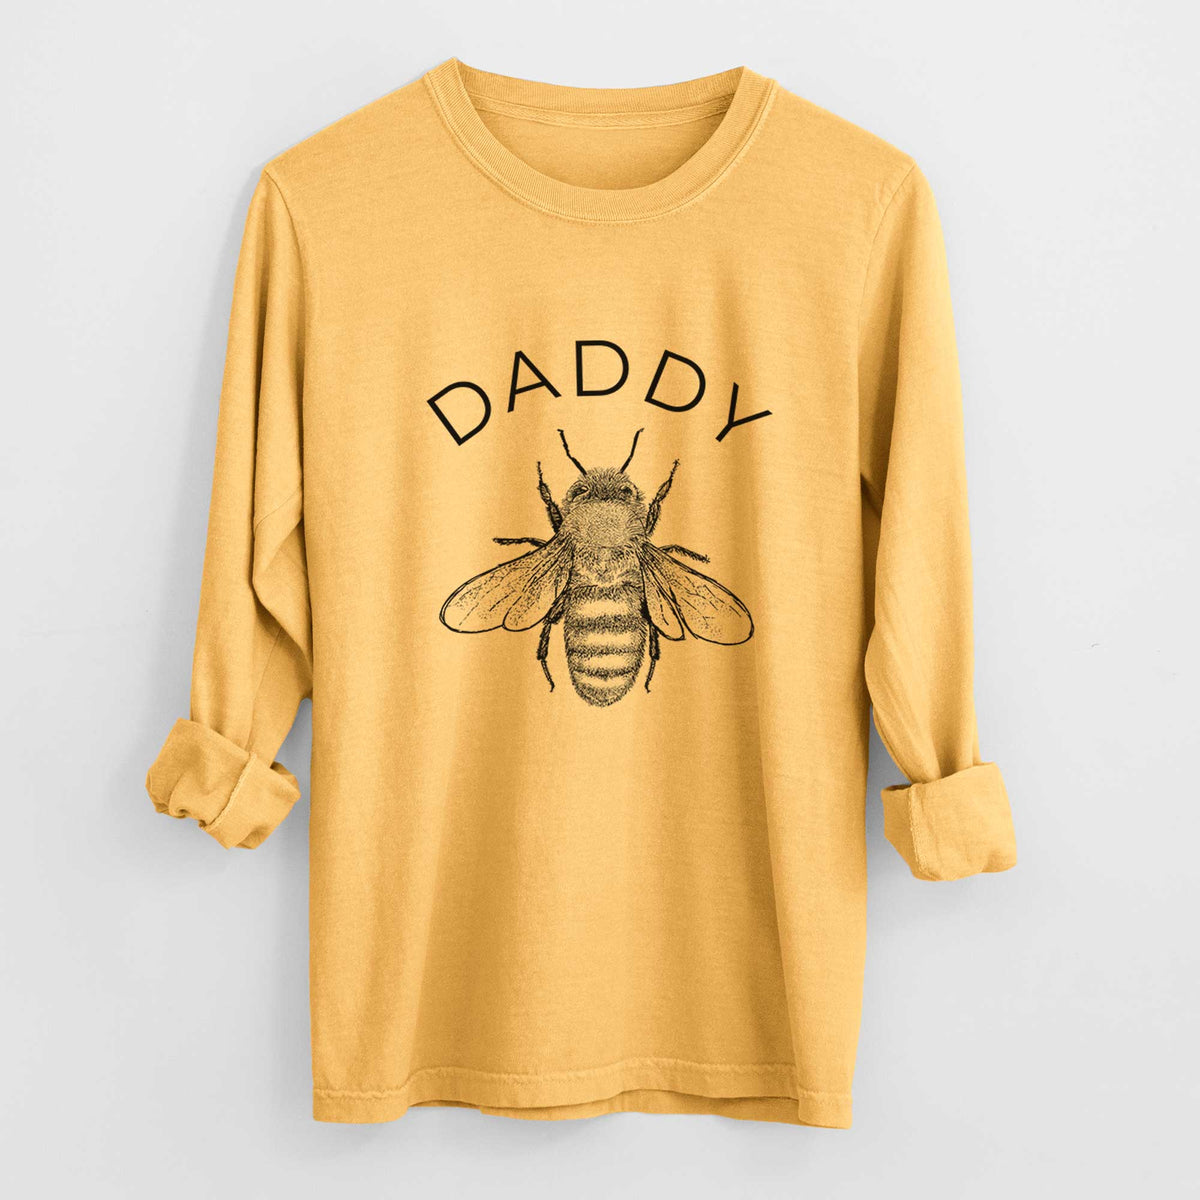 Daddy Bee - Heavyweight 100% Cotton Long Sleeve